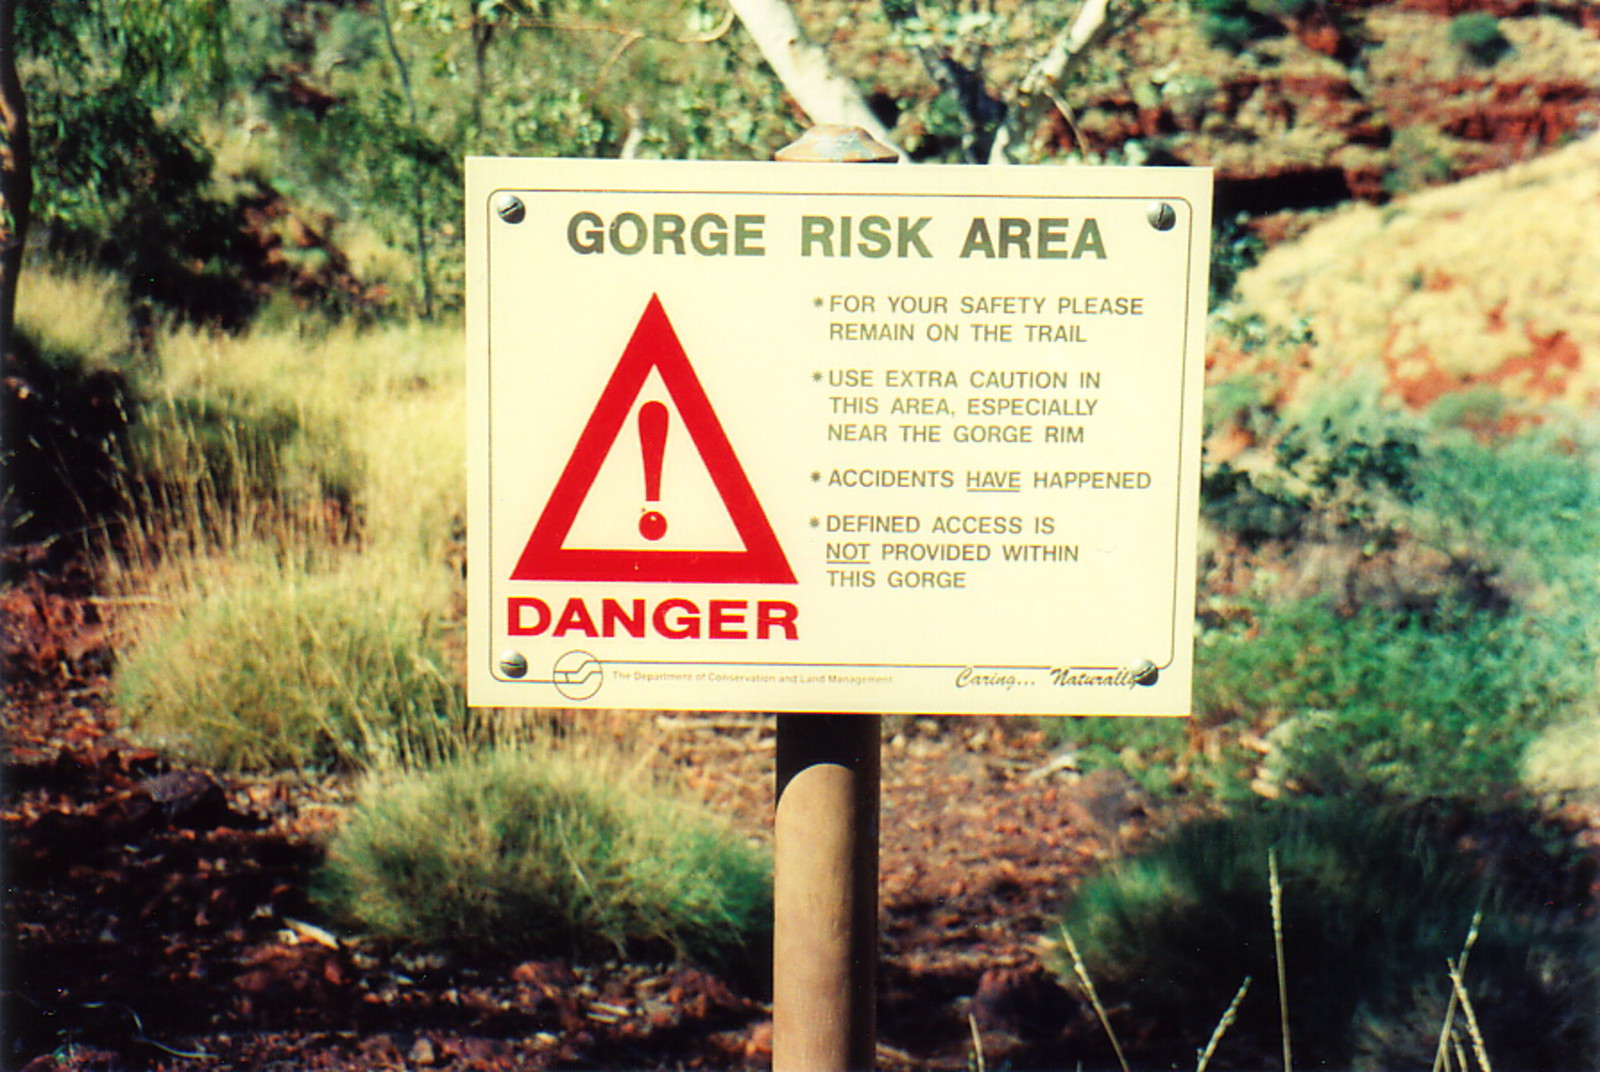 A warning sign in a gorge in Karijini